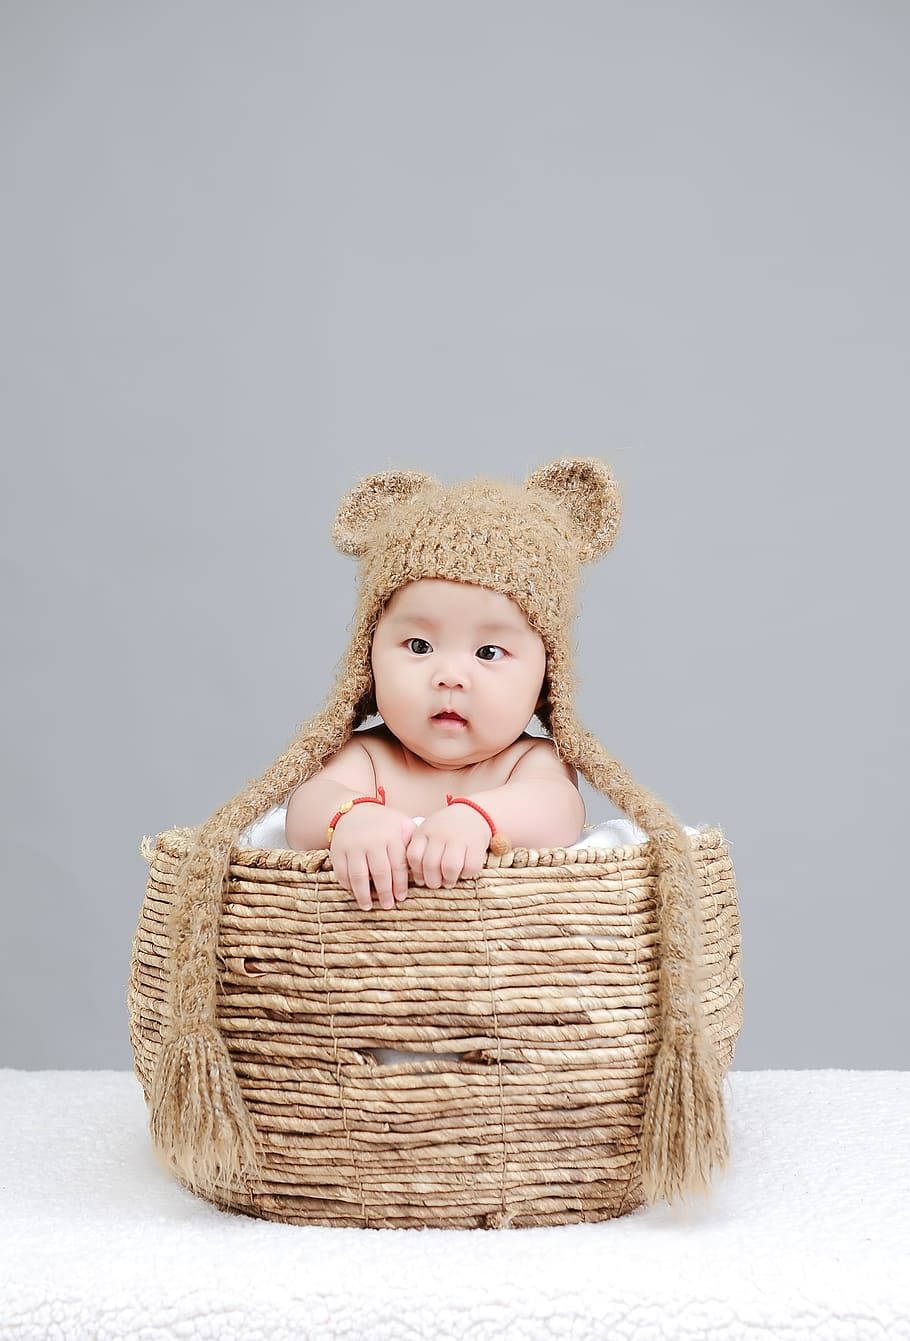 Newborn Child In A Knitted Basket Wallpaper